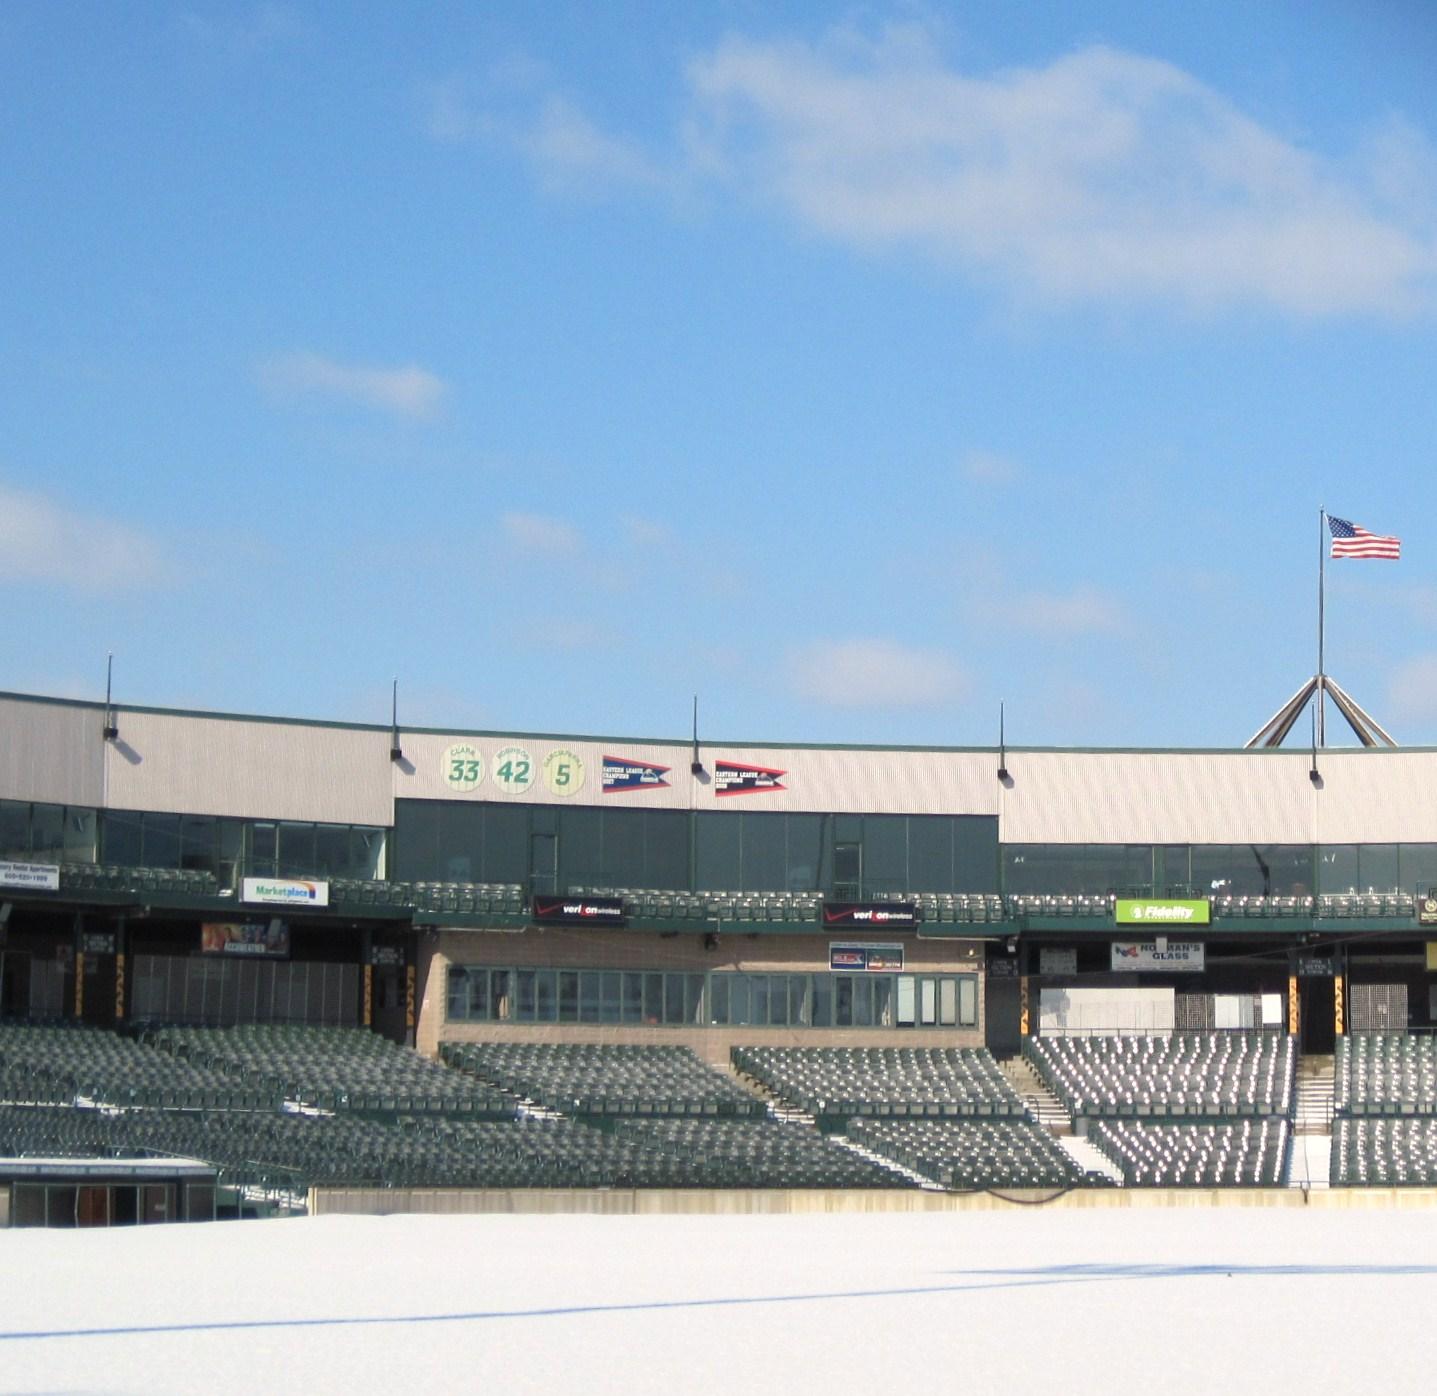 Winter Day at the Stadium